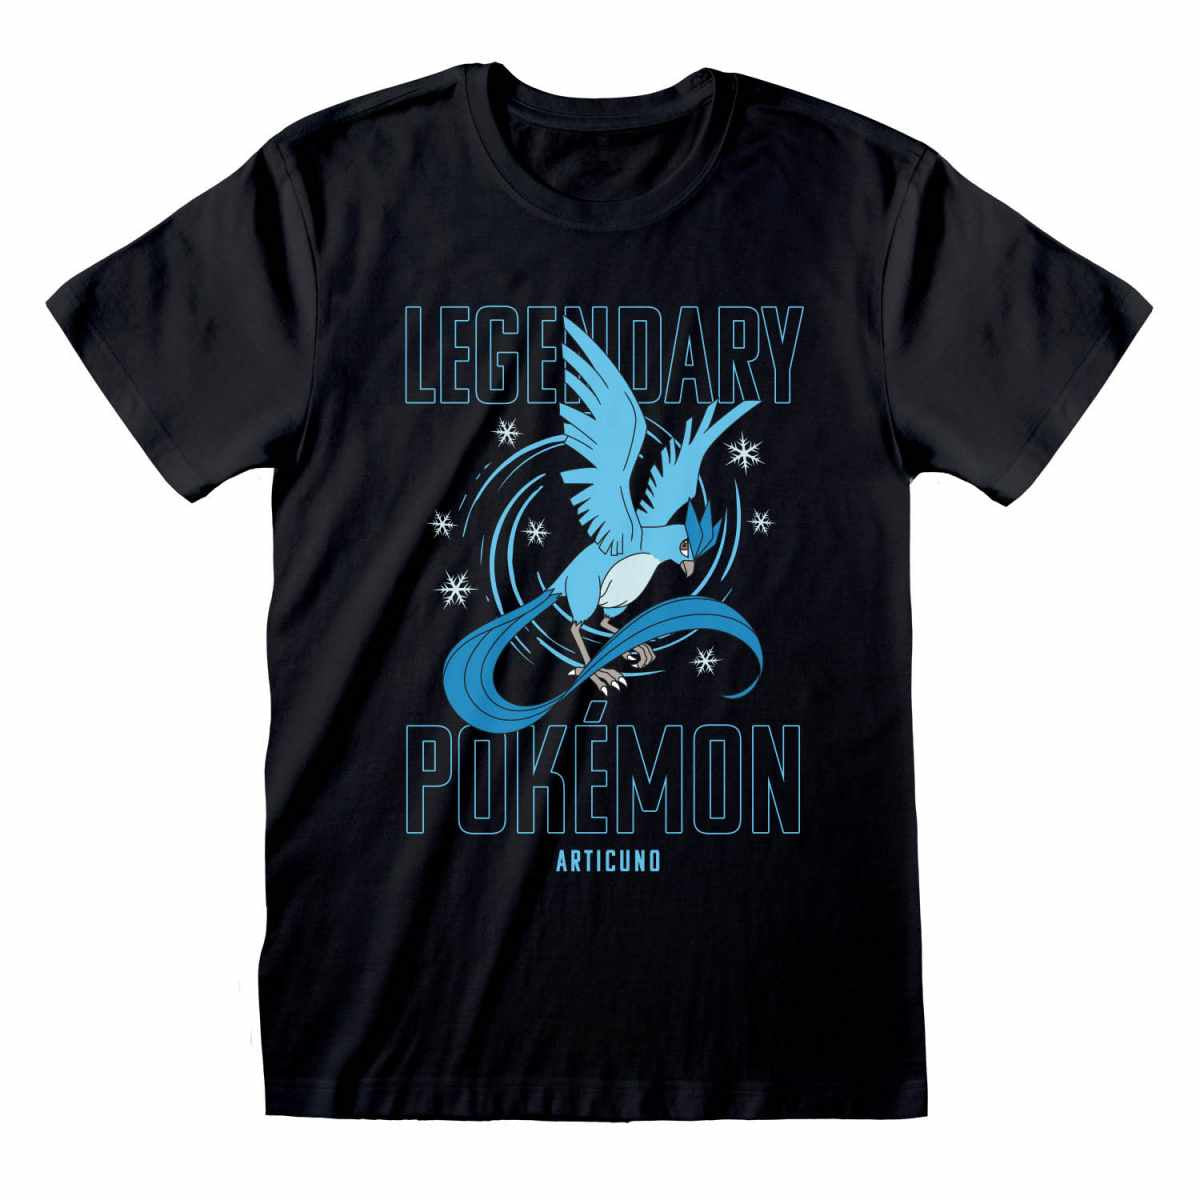 POKEMON - Legendary Articuno T-Shirt